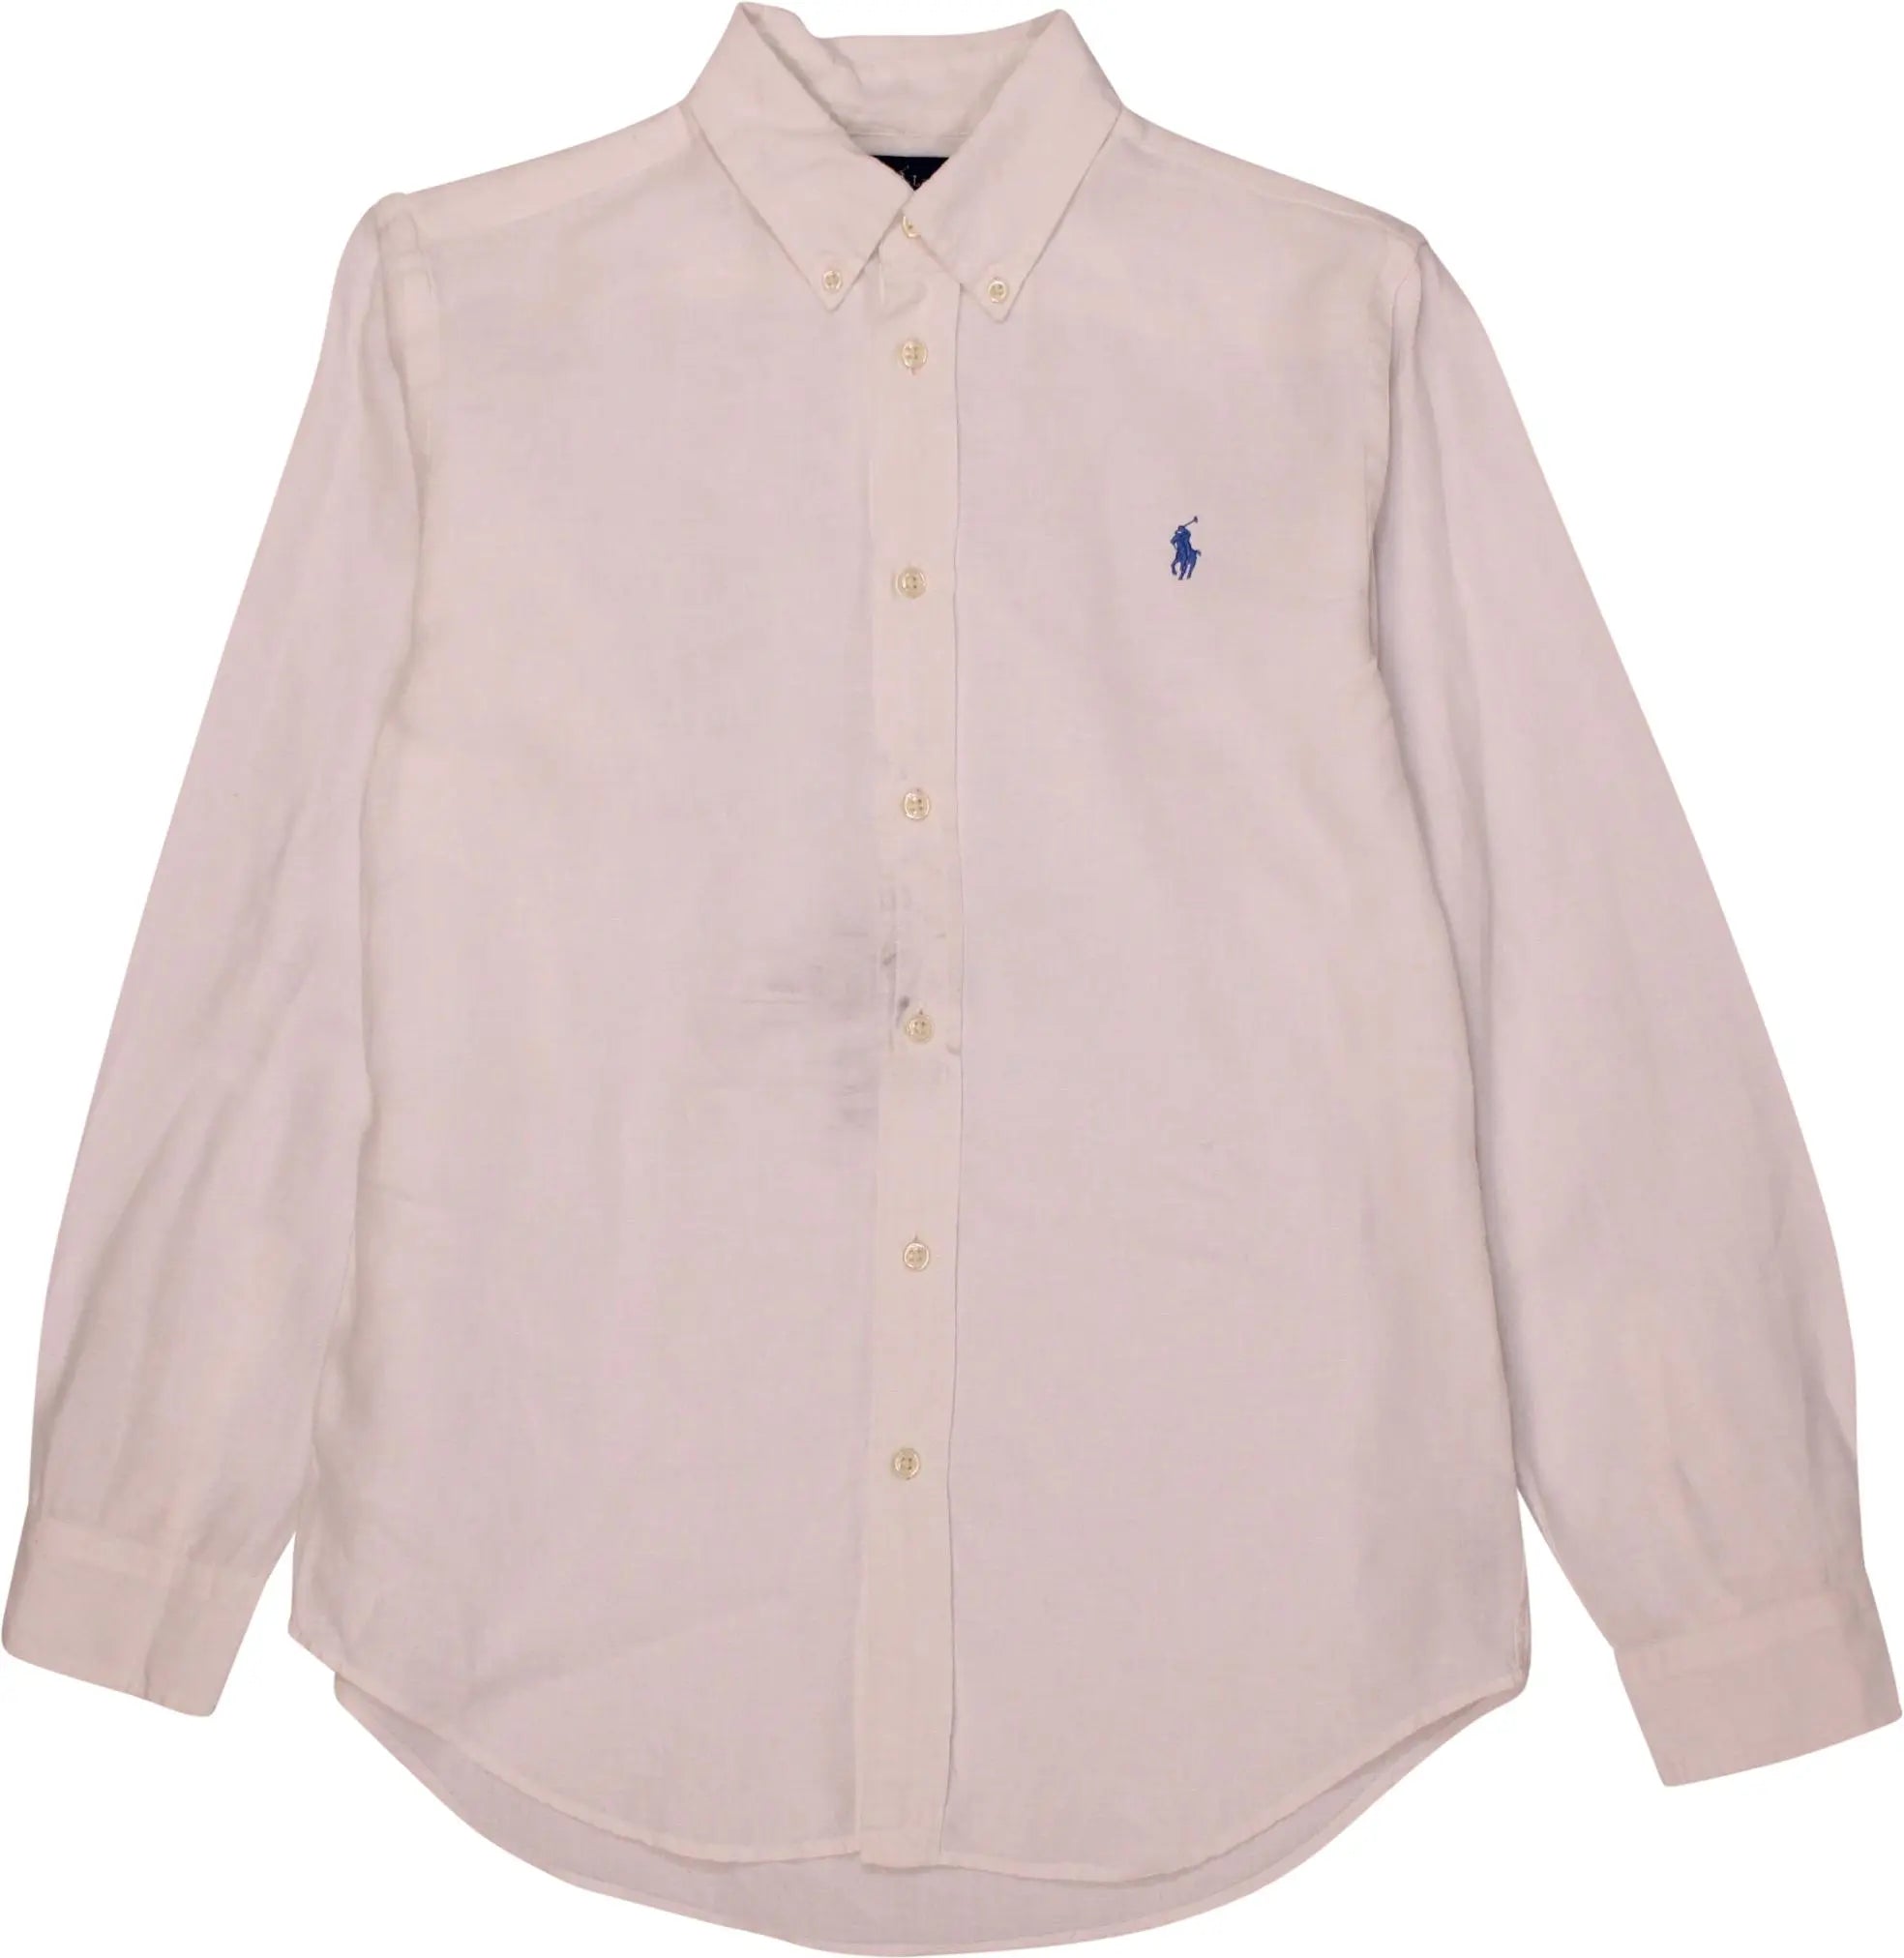 Ralph Lauren - White Linen Shirt by Ralph lauren- ThriftTale.com - Vintage and second handclothing